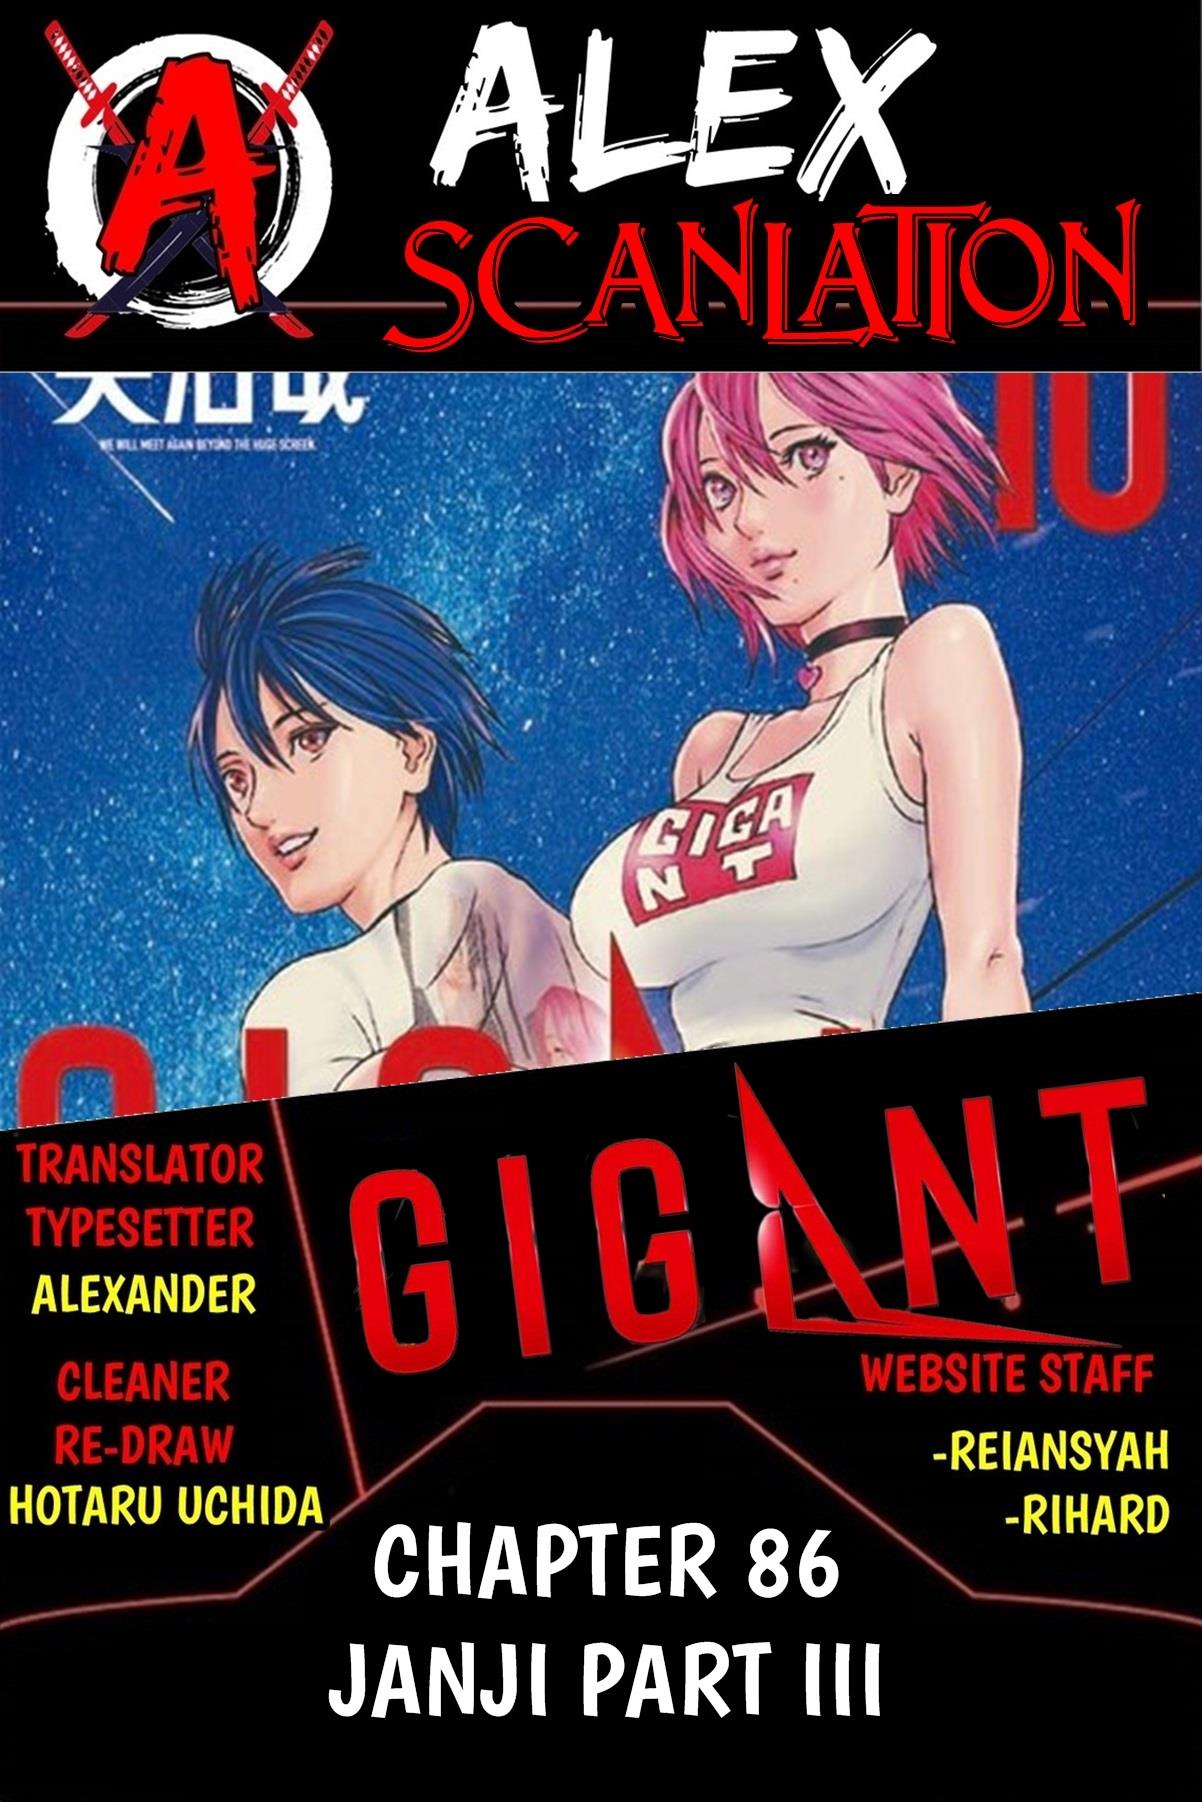 GIGANT Chapter 86